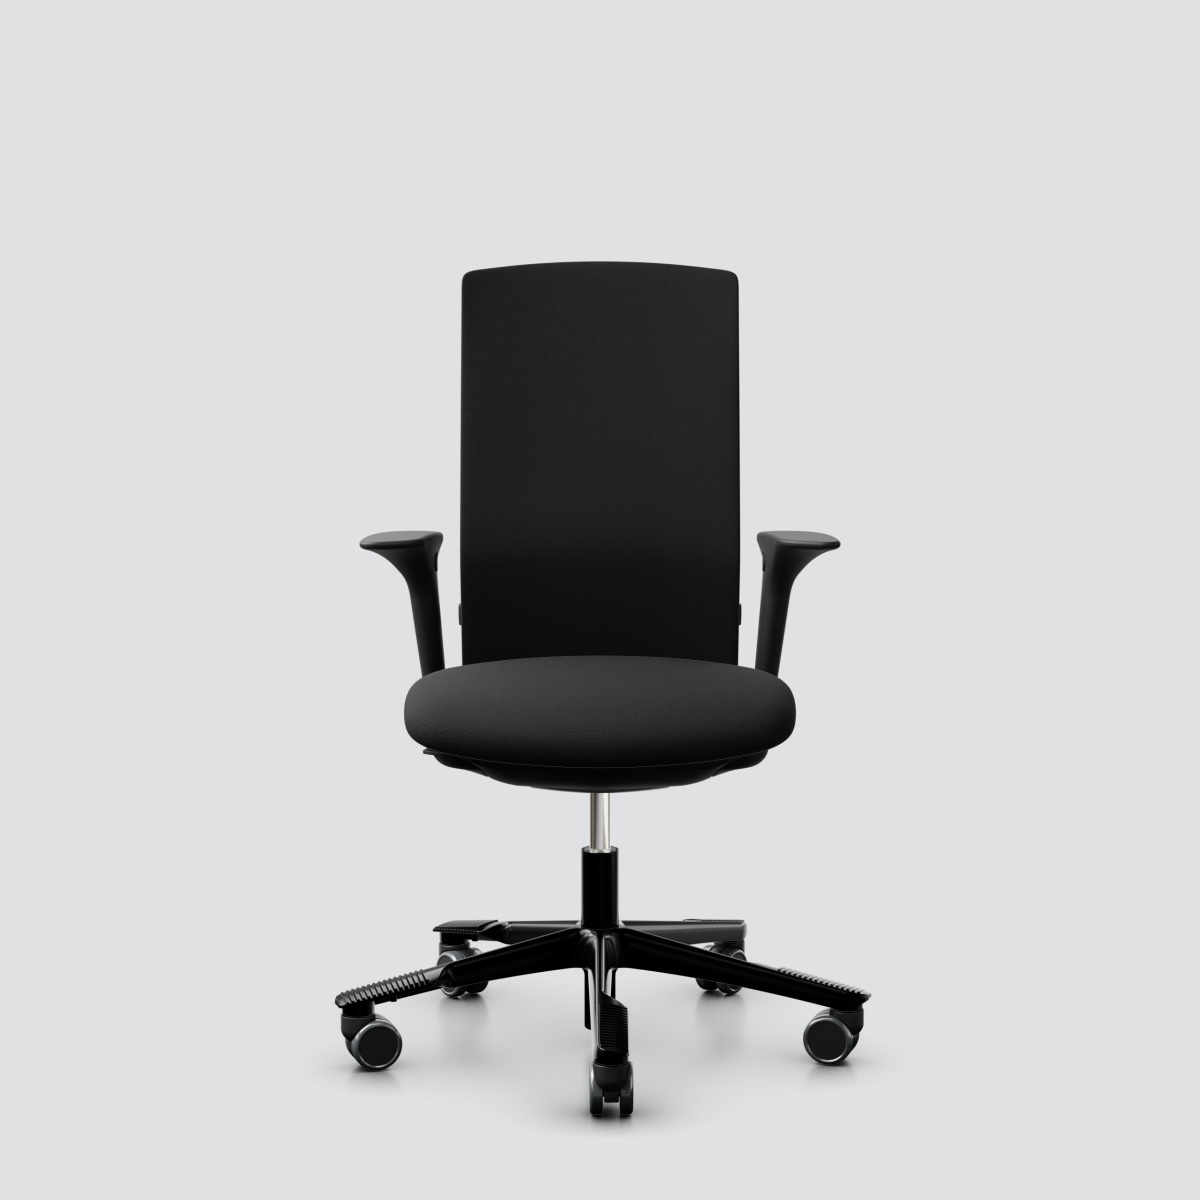 Office chair Futu 1200, black fabric, armrests, black base